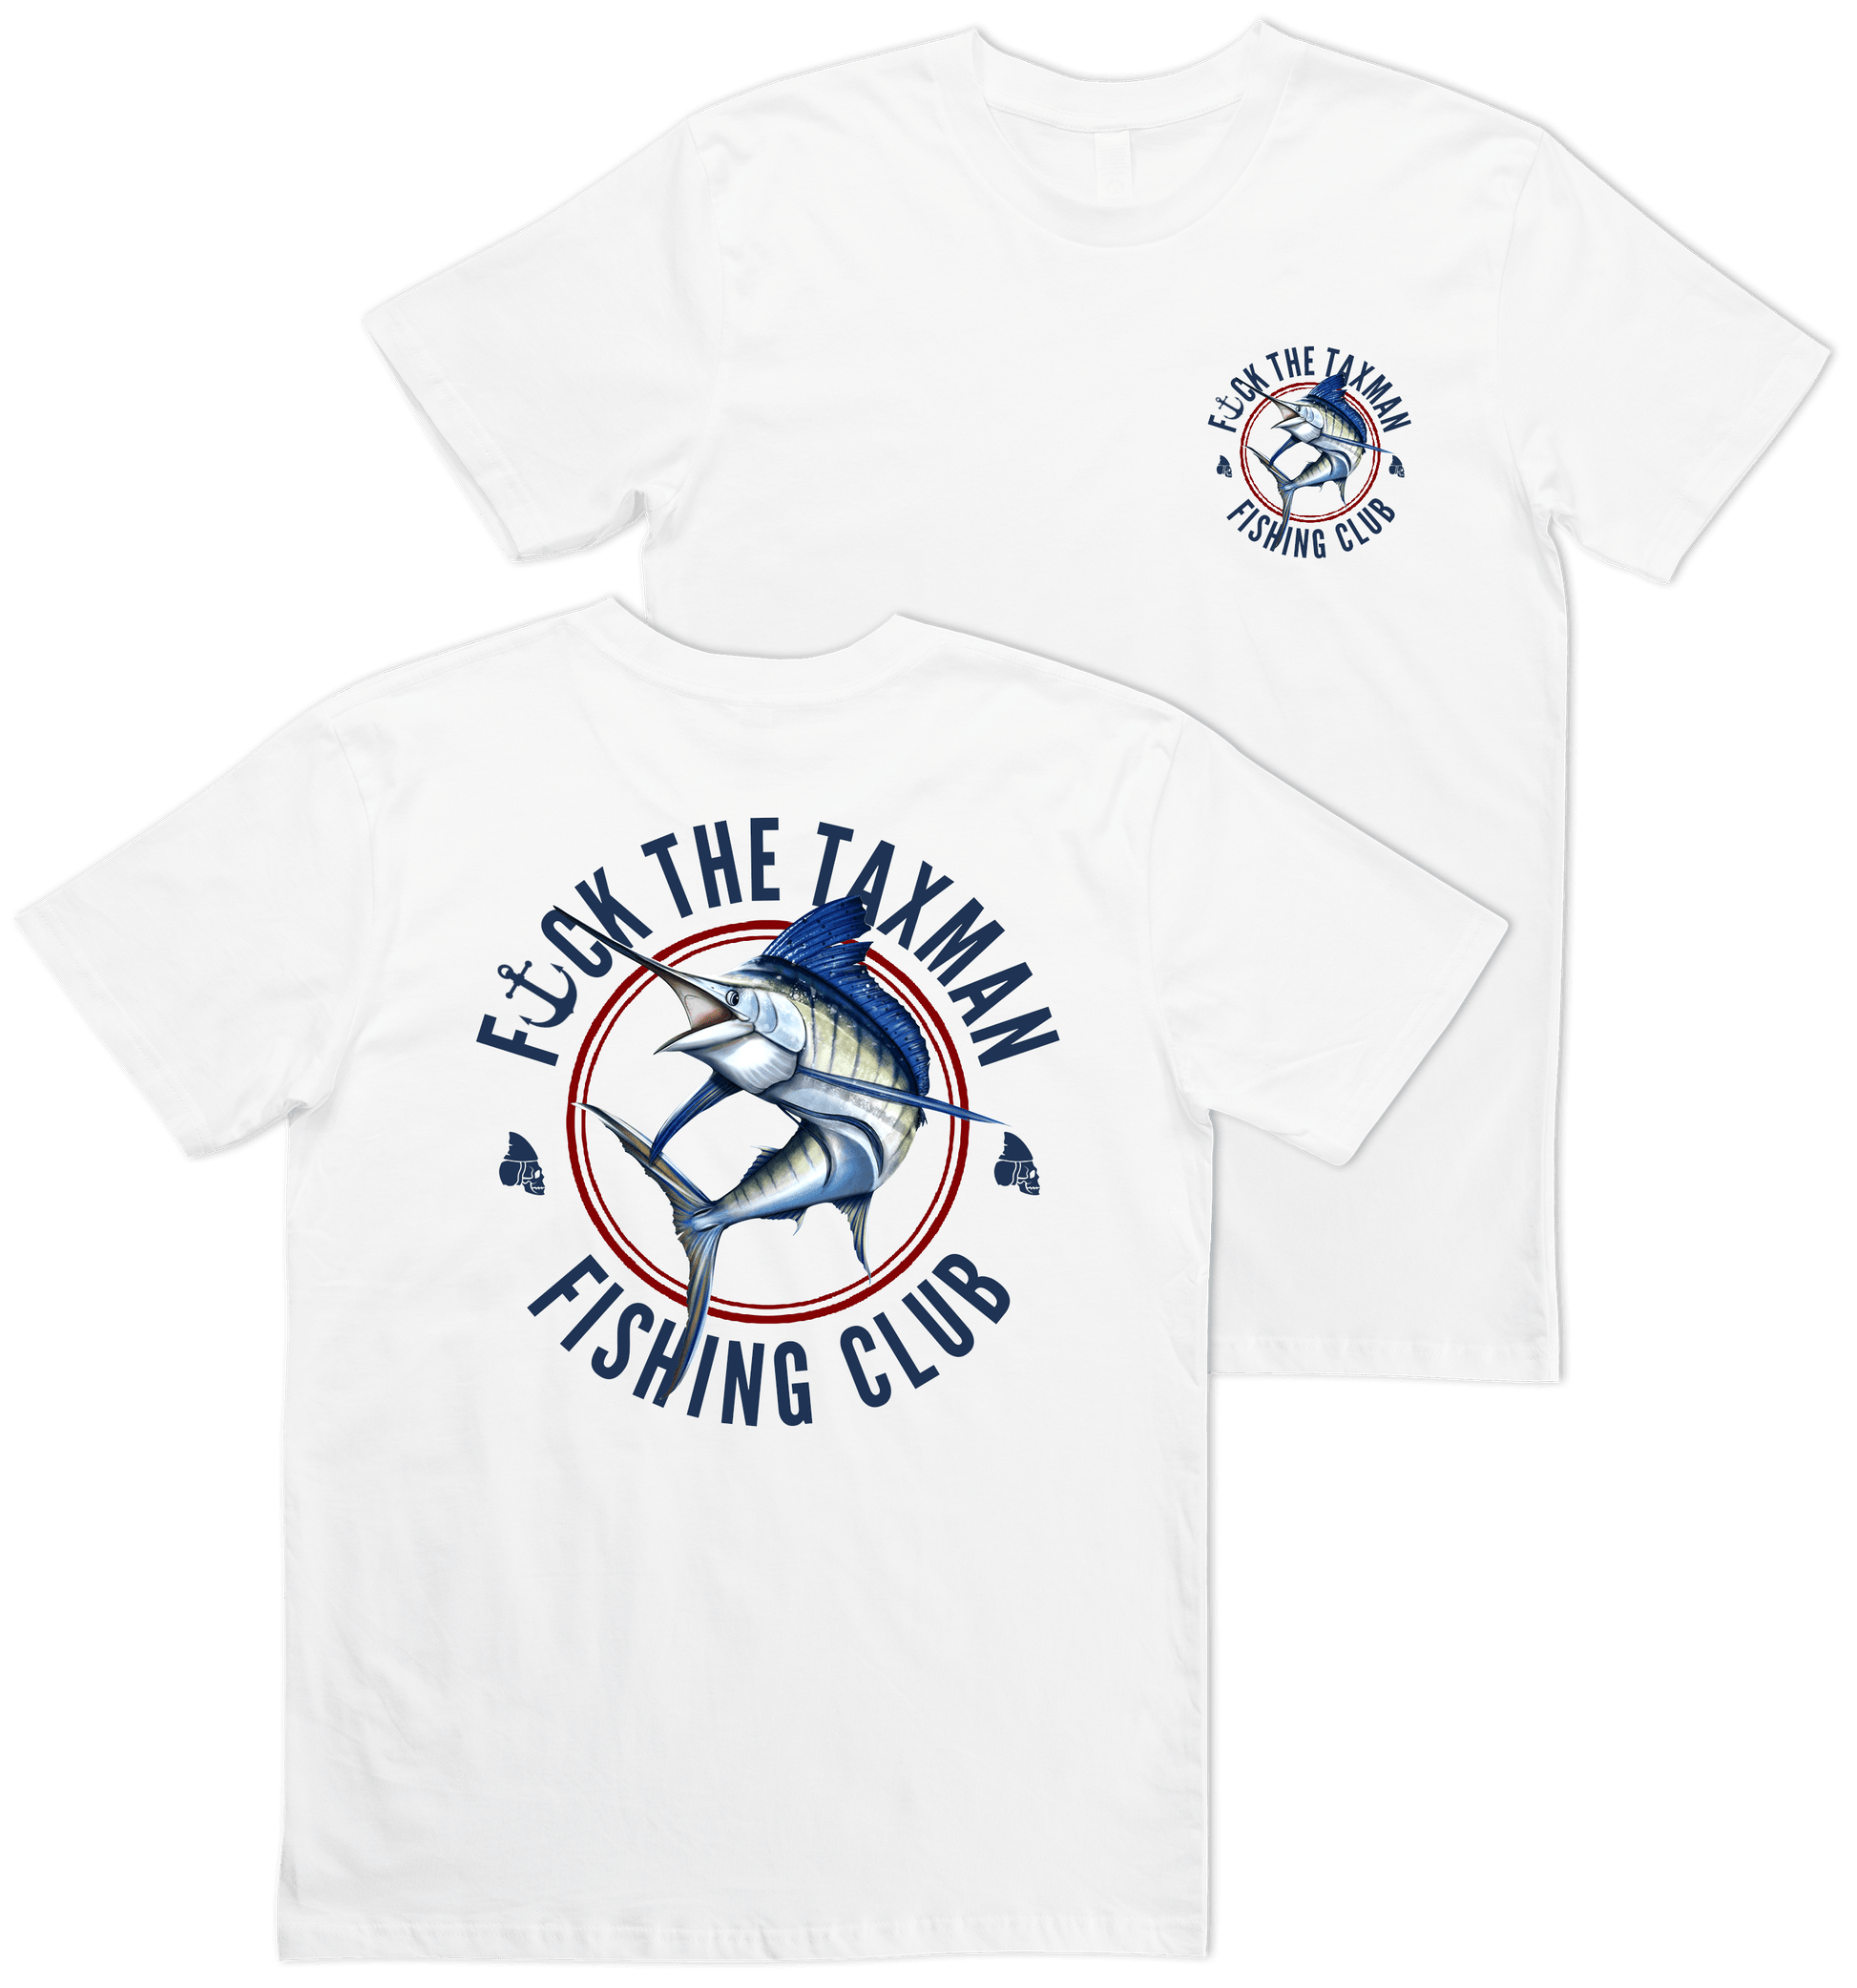 Marlin fishing T-shirt white with fish